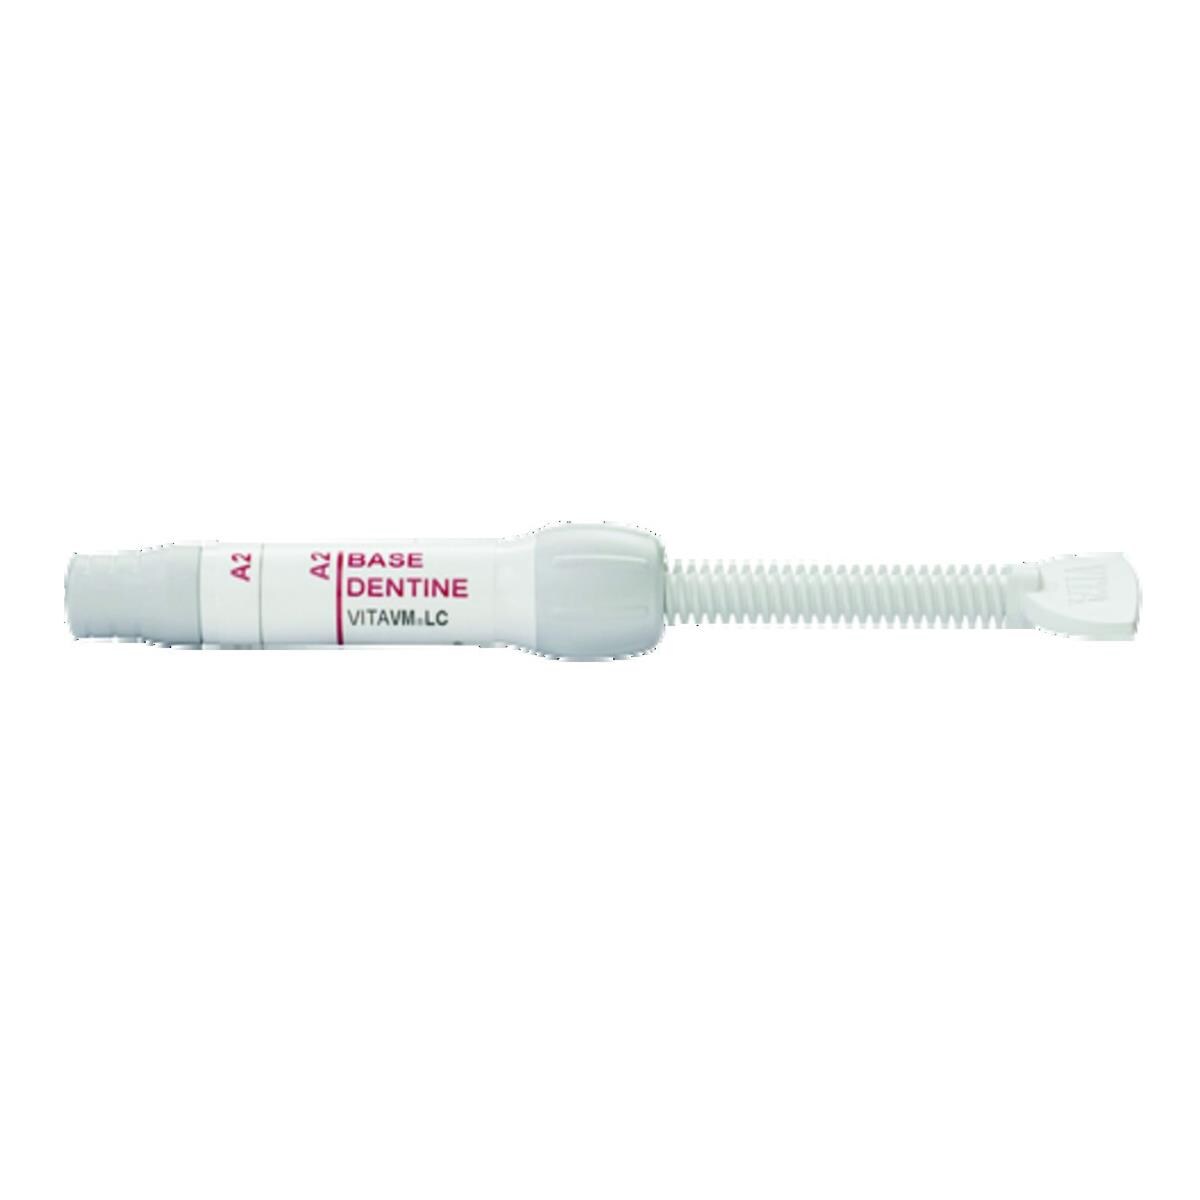 VM LC VITA - 3-D Master - Base Dentine 4L2,5 - La seringue de 4 g